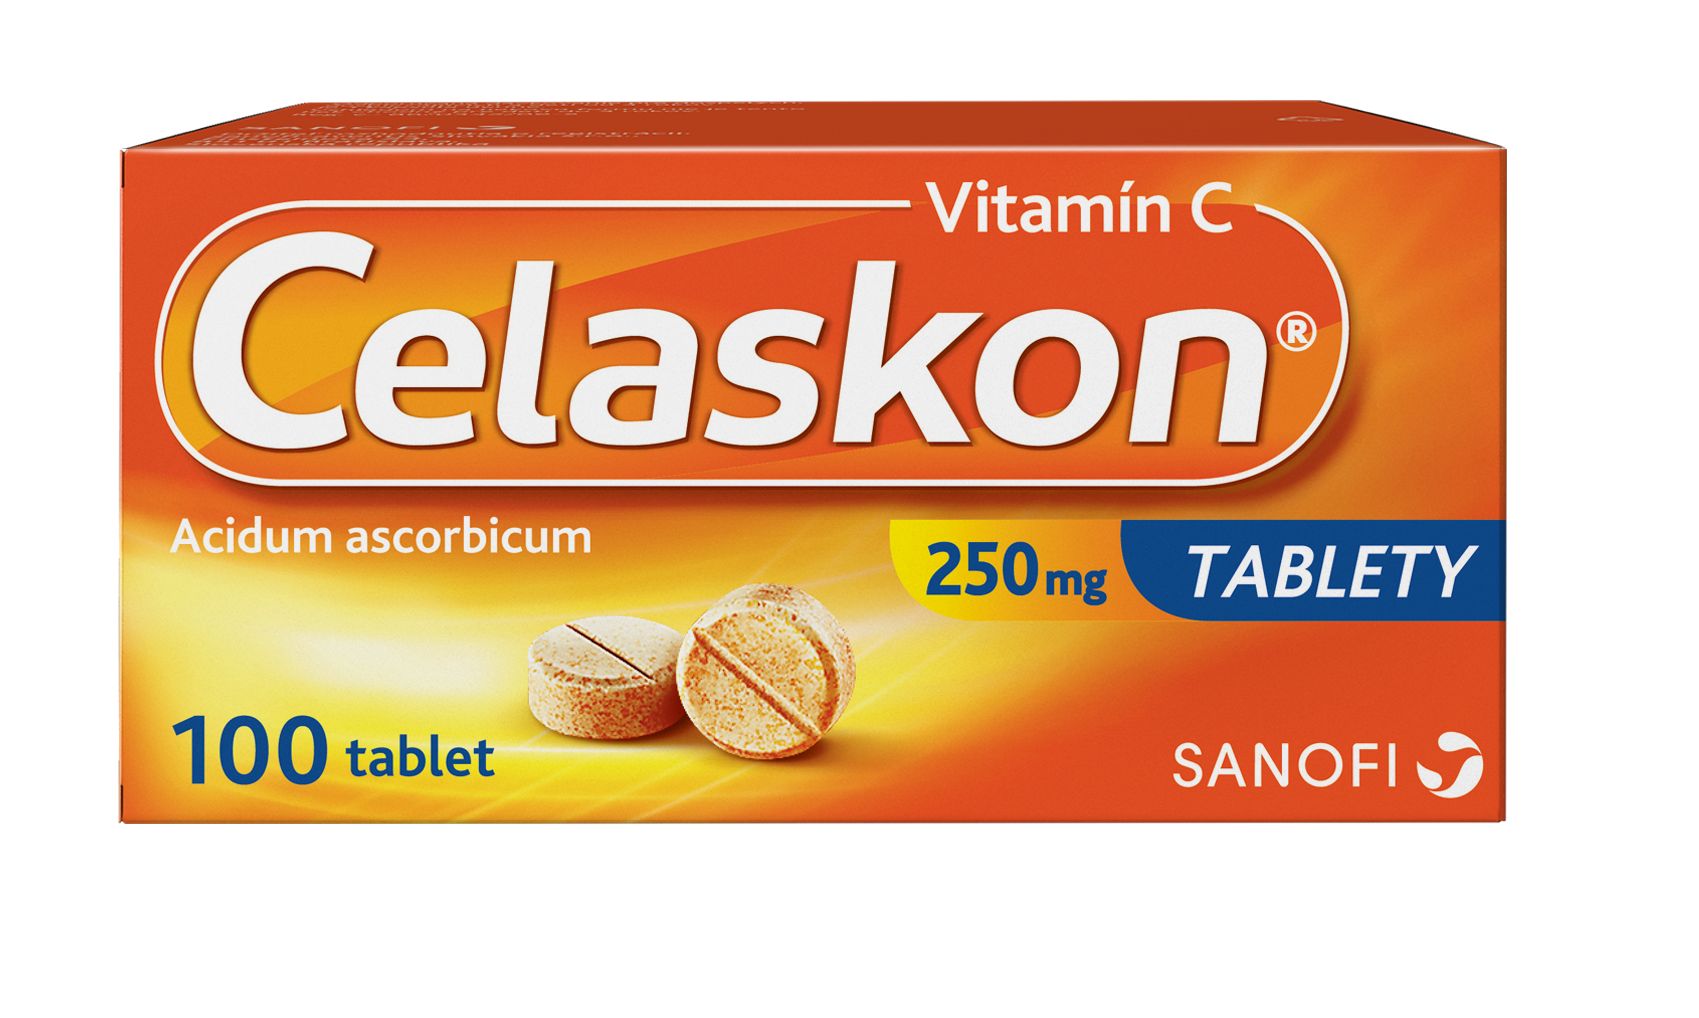 Celaskon 250 mg 100 tablet Celaskon